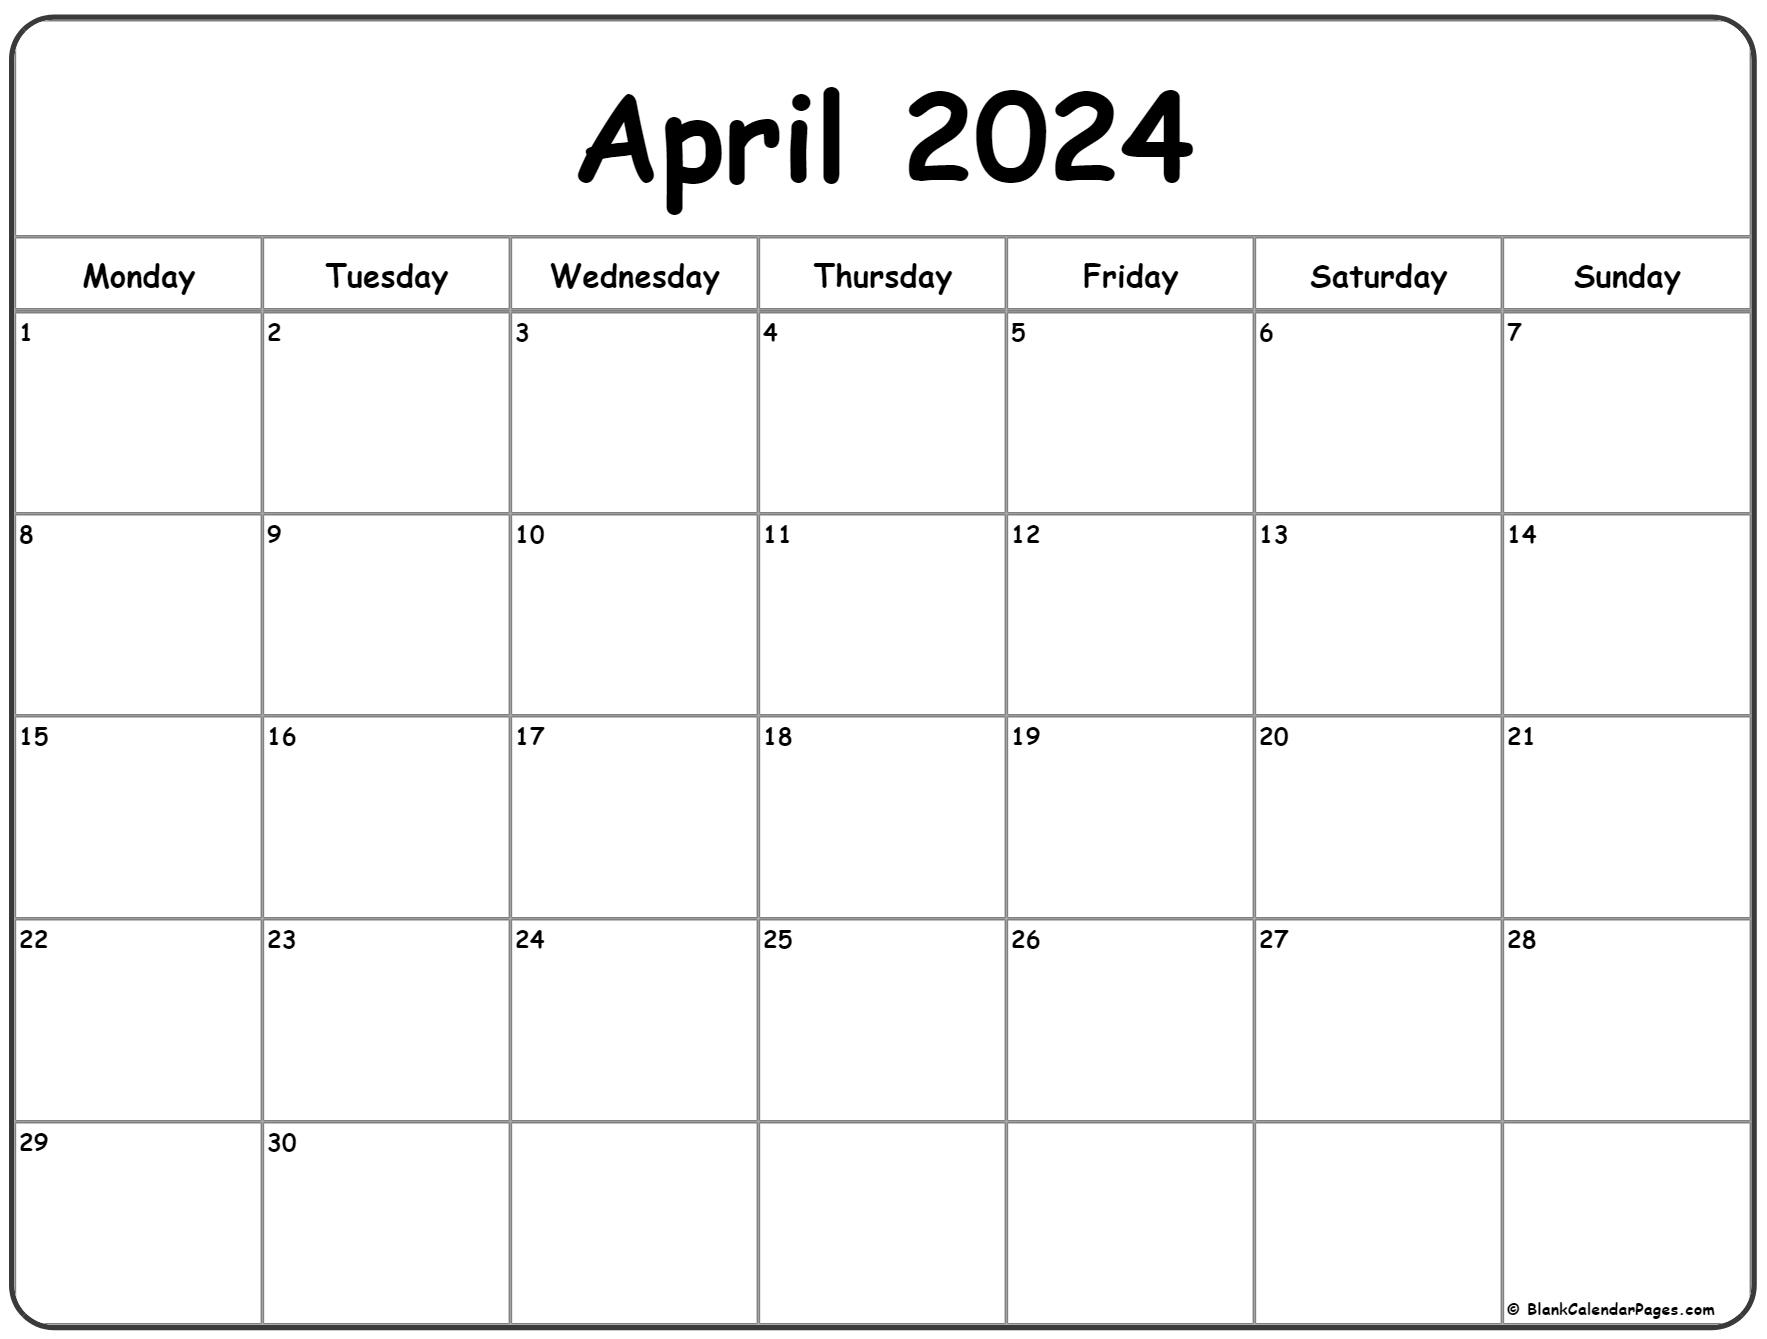 April 2024 Monday Calendar | Monday To Sunday for April 2024 Weekly Calendar Printable